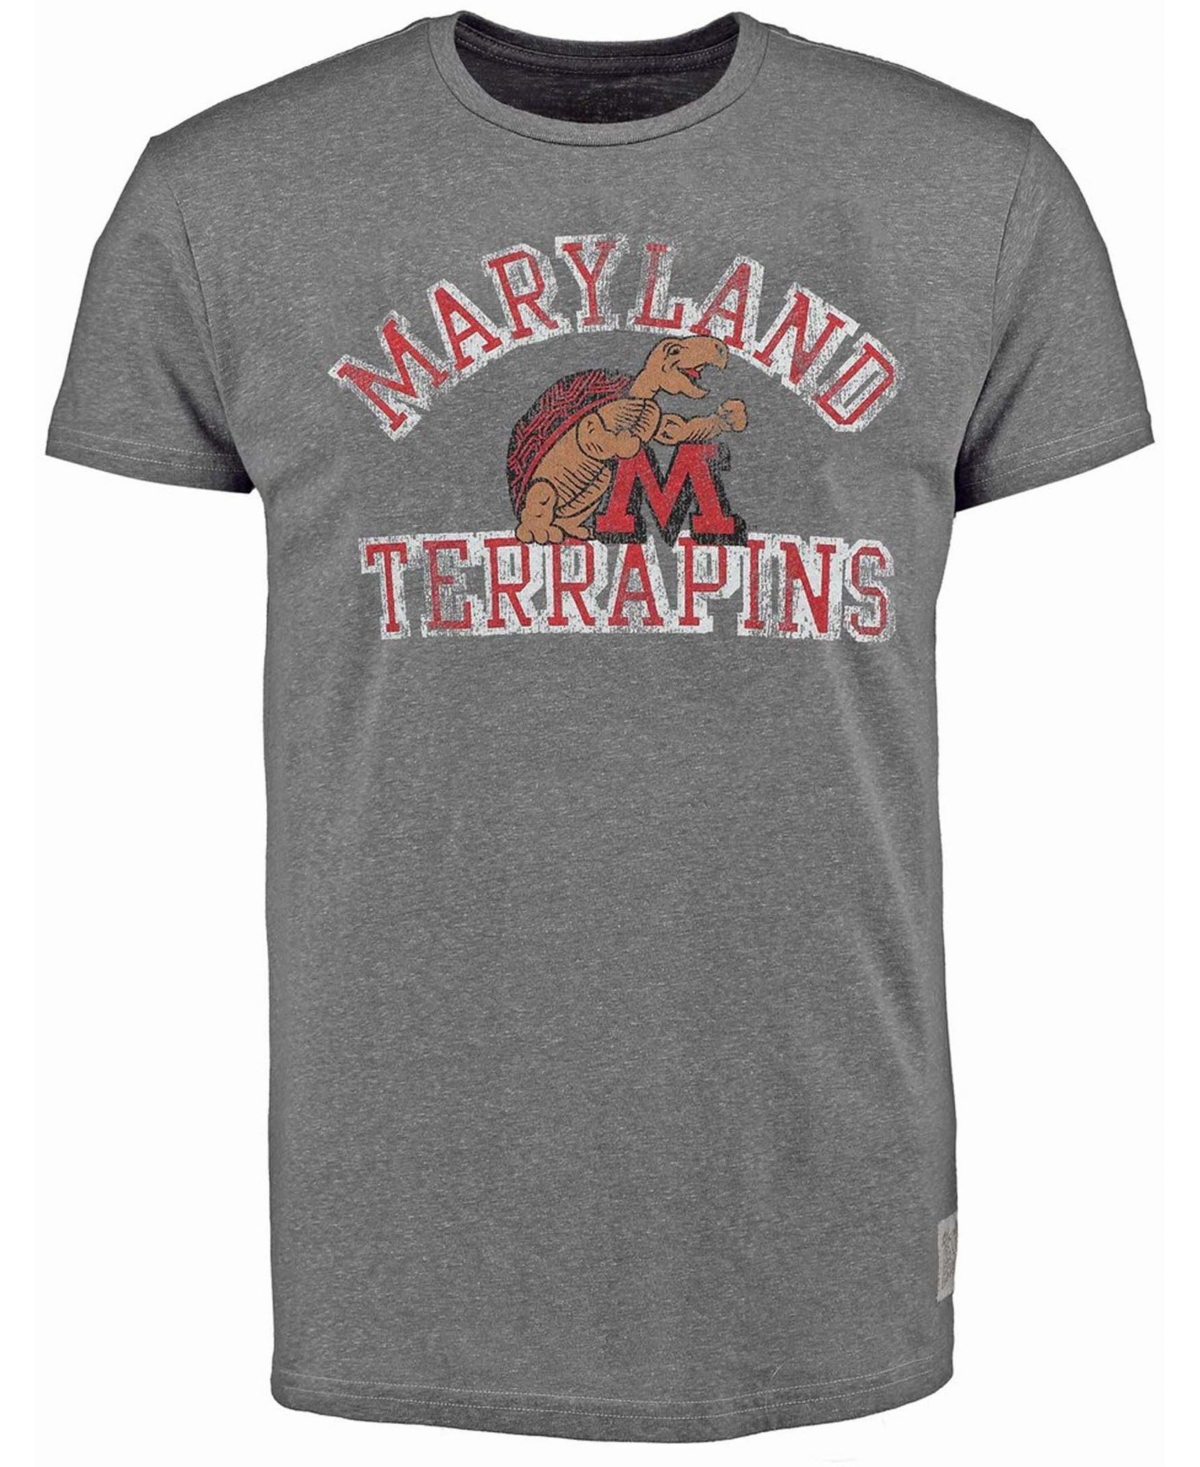 Men's Heathered Gray Maryland Terrapins Vintage-Like Tri-Blend T-shirt - Heathered Gray